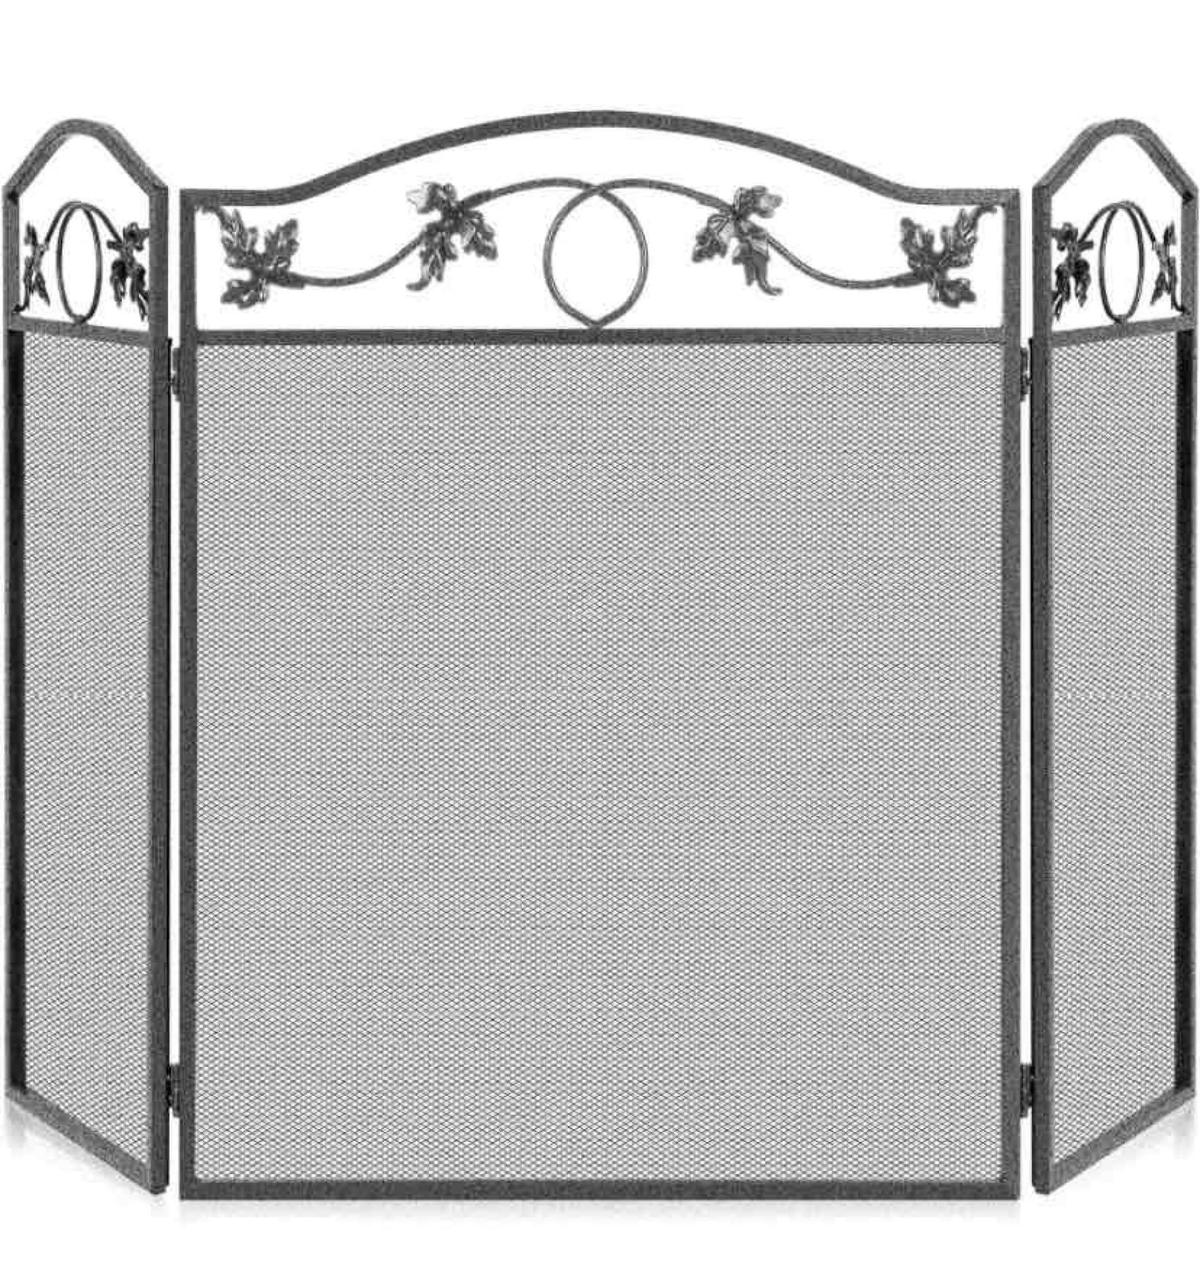 Amagabeli Free Standing Fireplace Screen 3 Panel Pewter Foldable